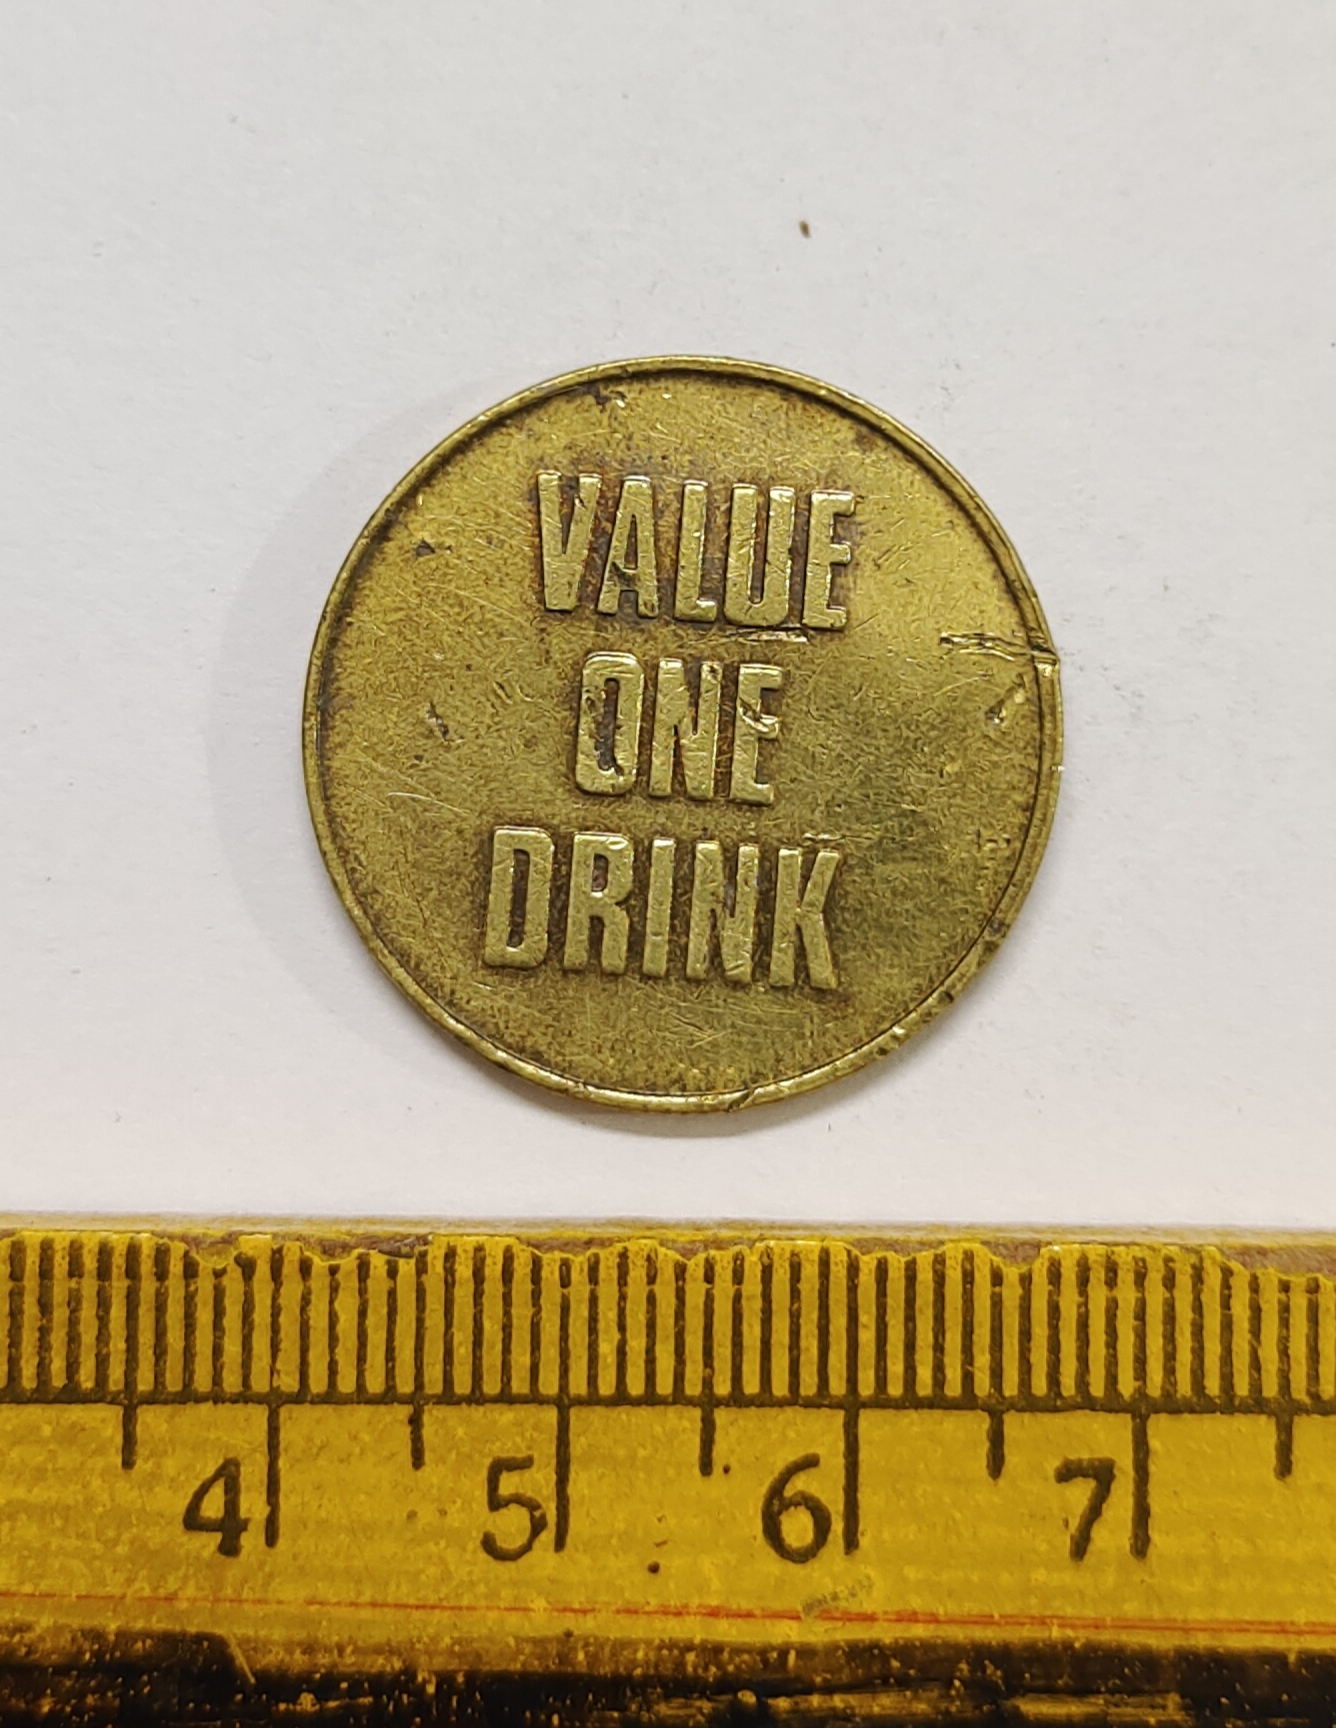 https://cdn.collectorbazar.com/products/rare-vintage-brass-token-of-coca-cola-value-one-drink-small-size-476750-2.jpg